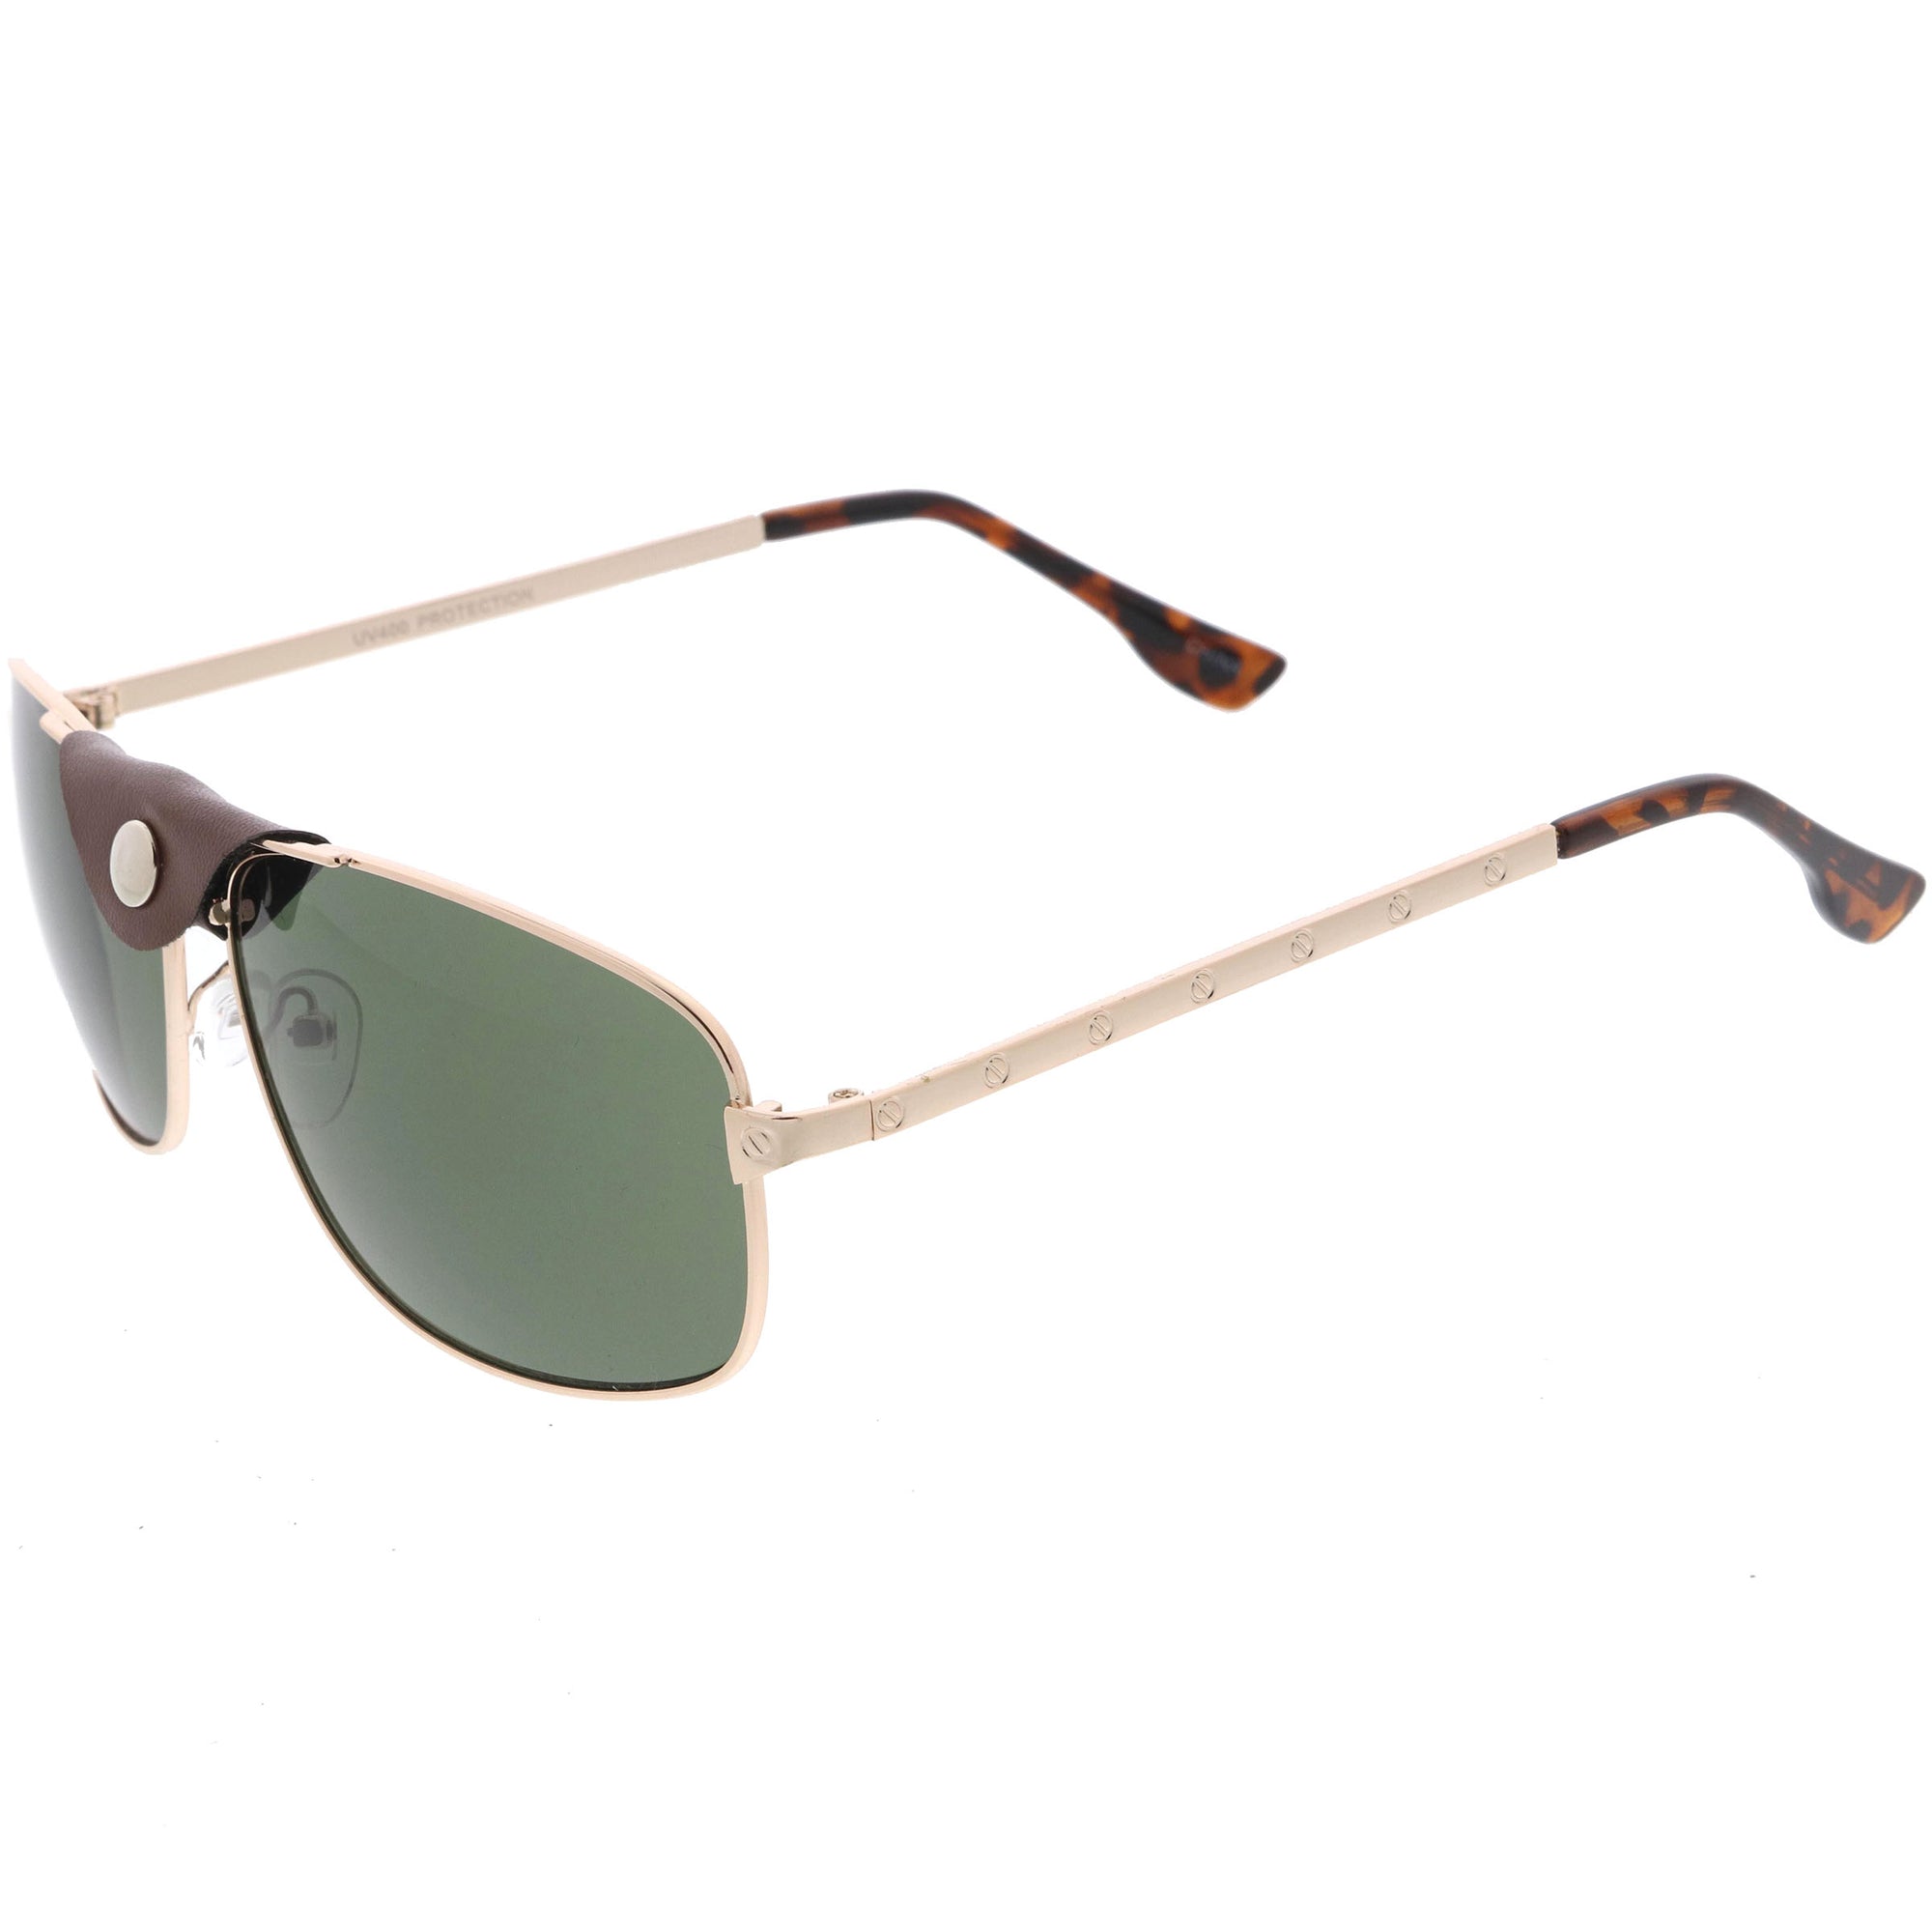 J+S Premium Military Style Classic Square Aviator Sunglasses, Polarized,  100% UV protection - JandSVision